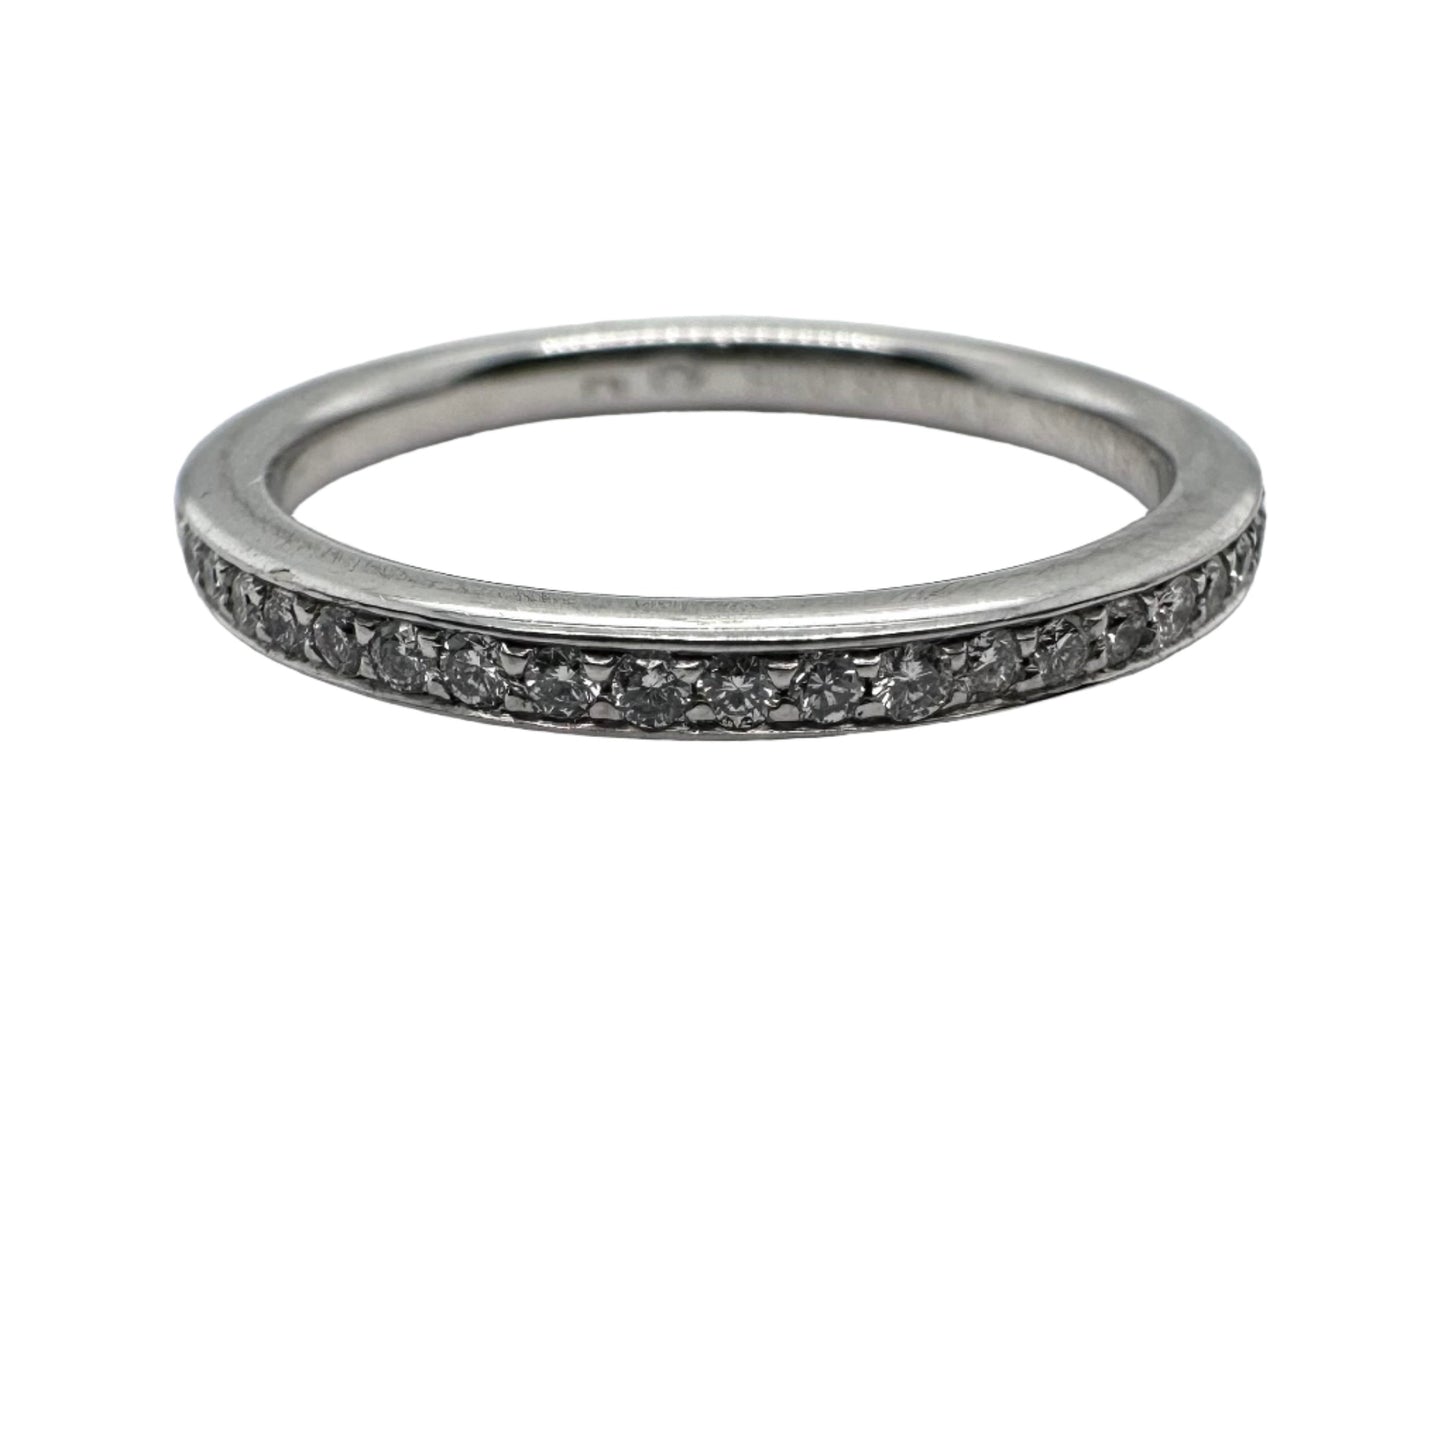 2.0mm diamond set wedding ring